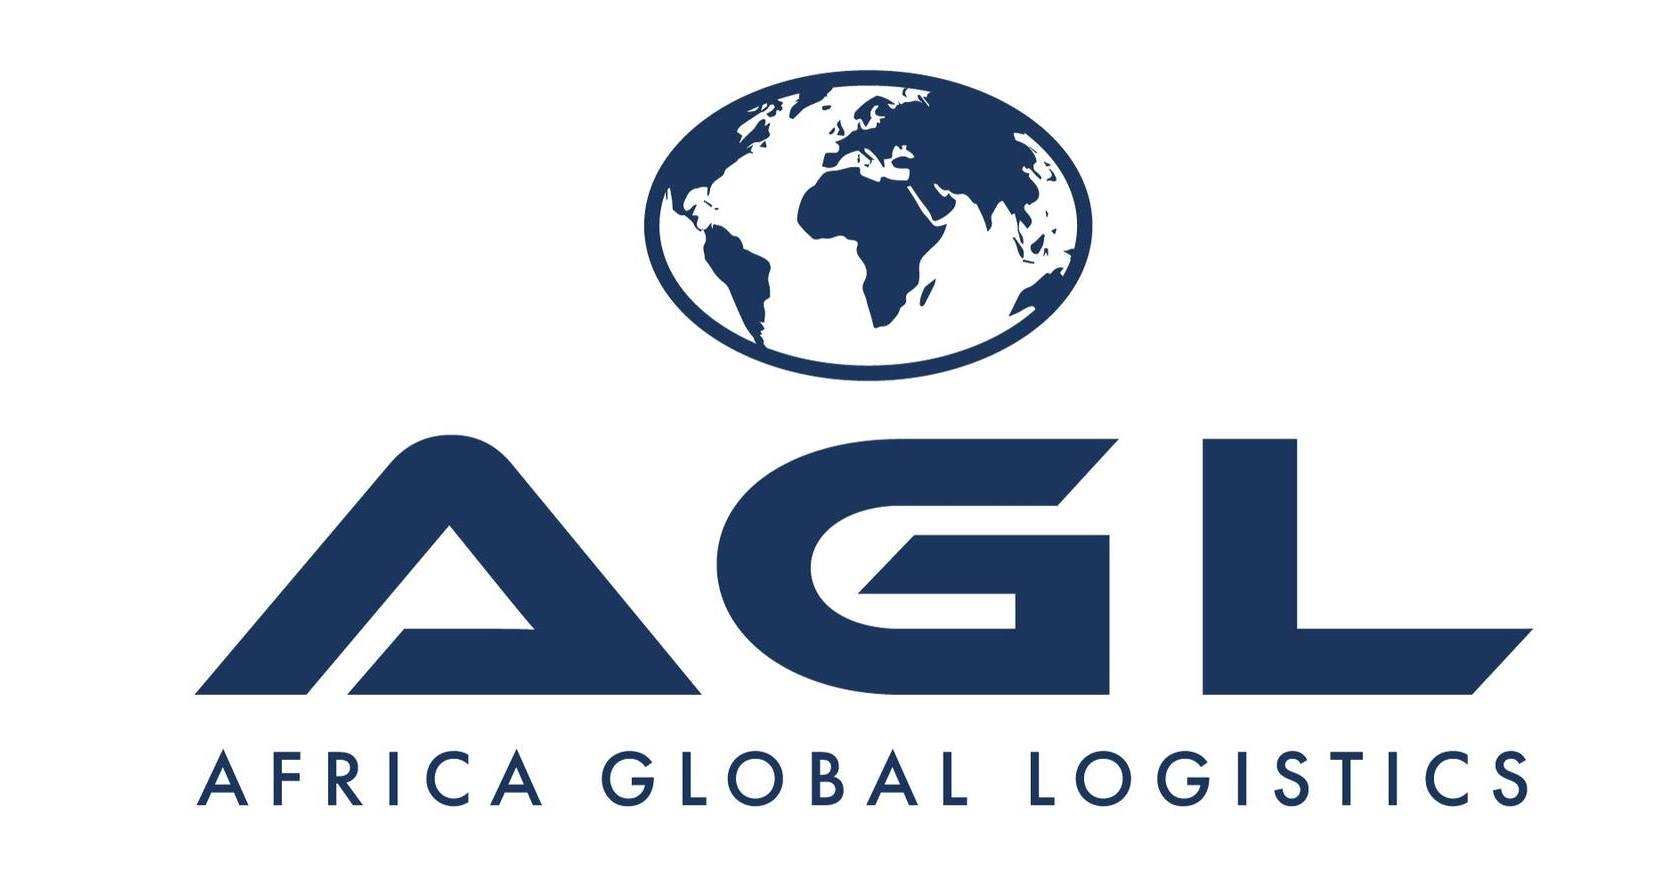 Africa_Global_Logistics_logo